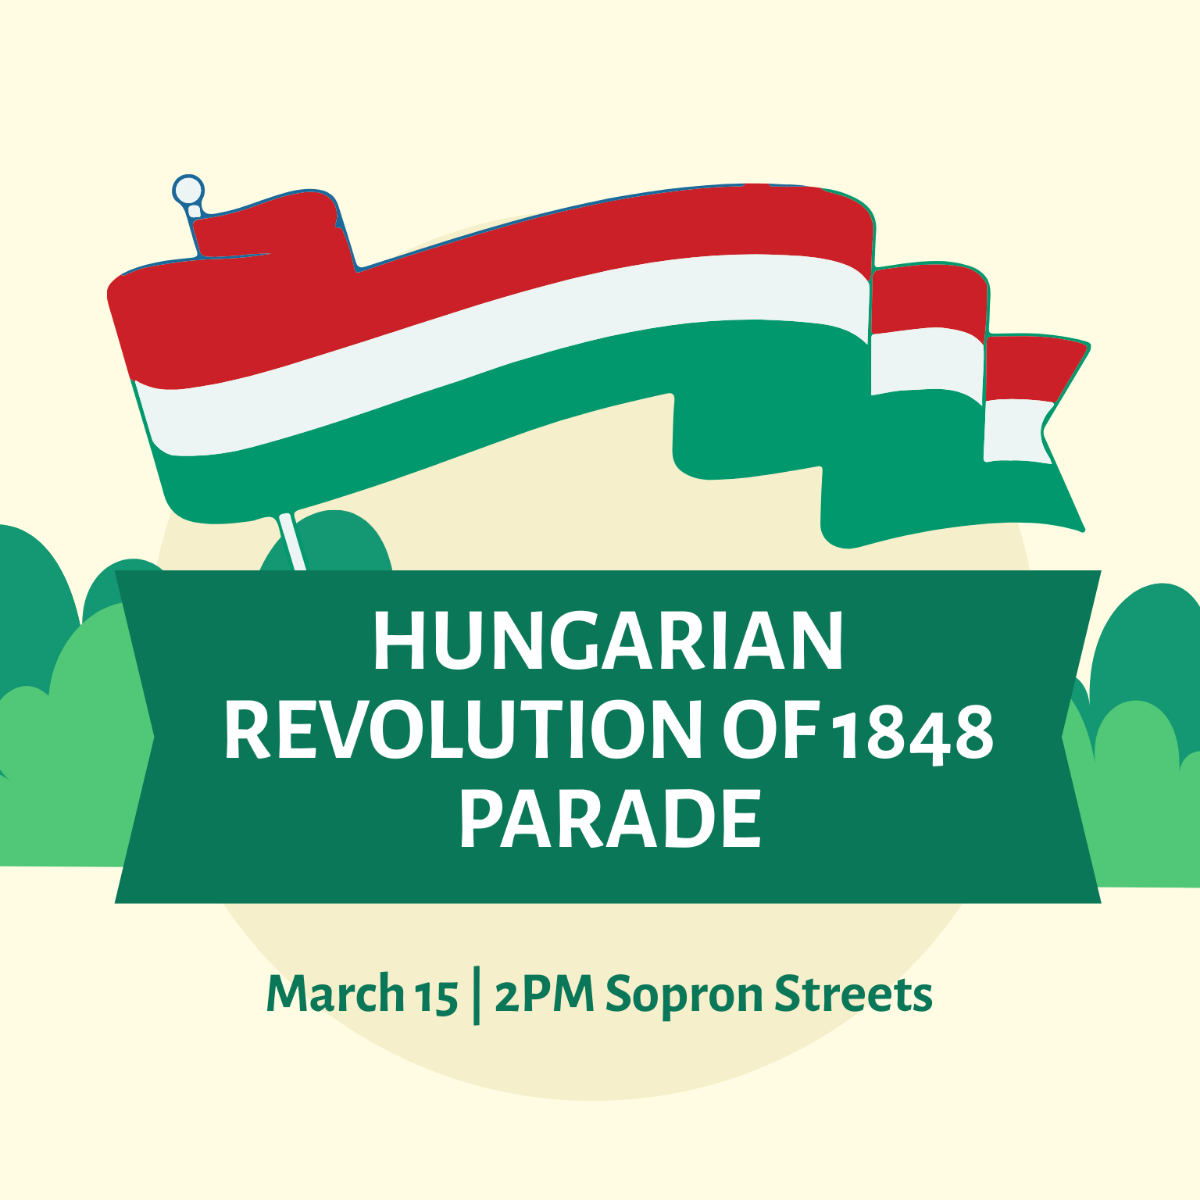 1848 Revolution Memorial Day Poster Vector Template